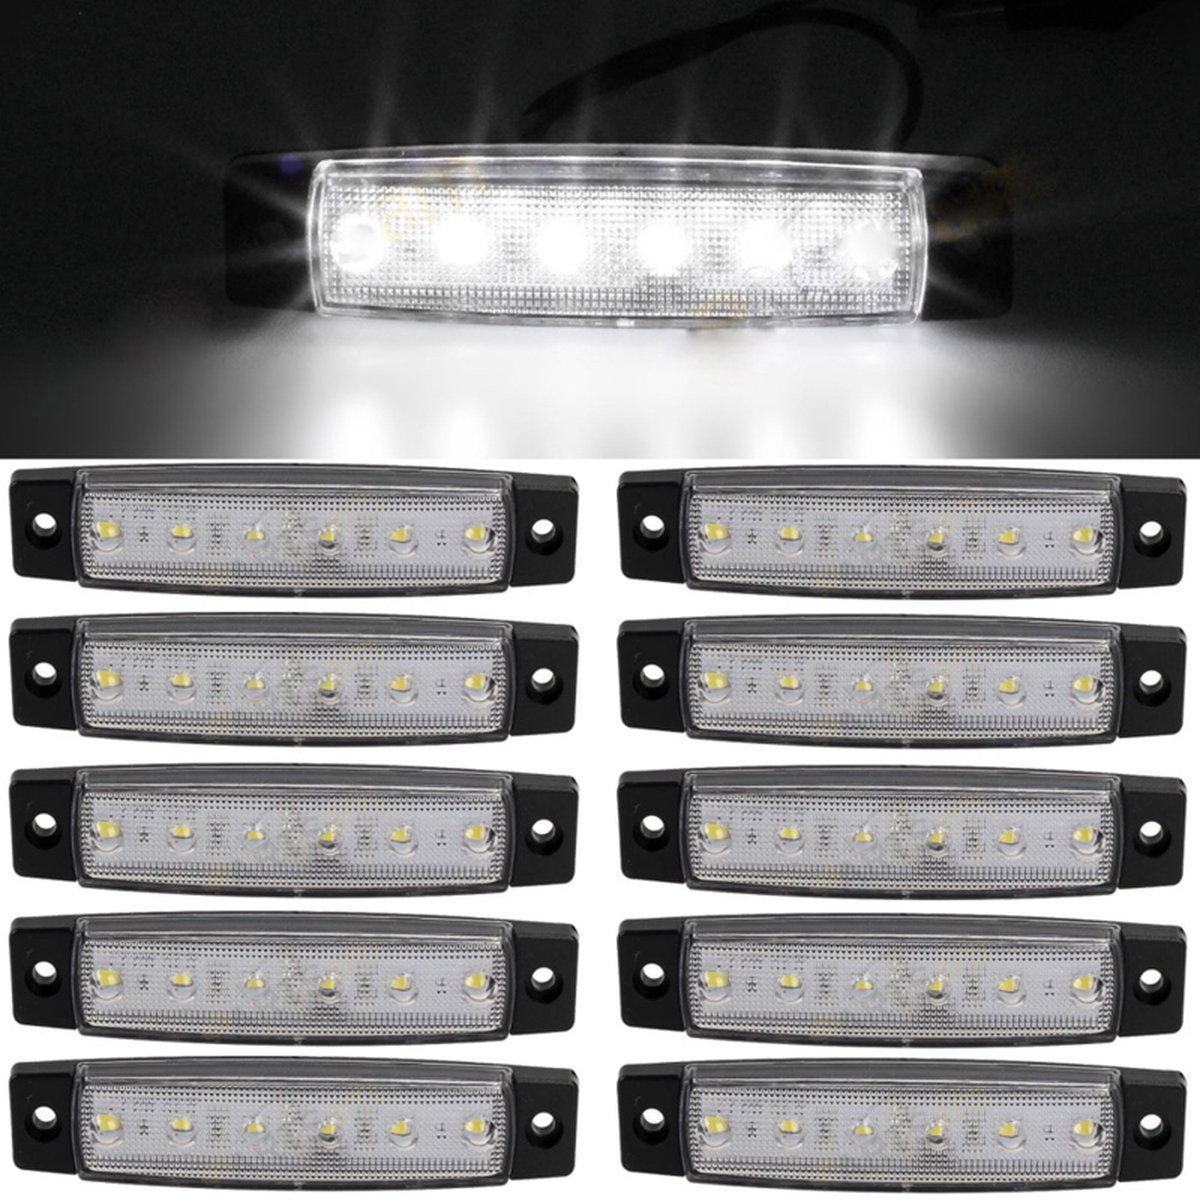 10 stuks LED contourverlichting 12v / 24v Wit